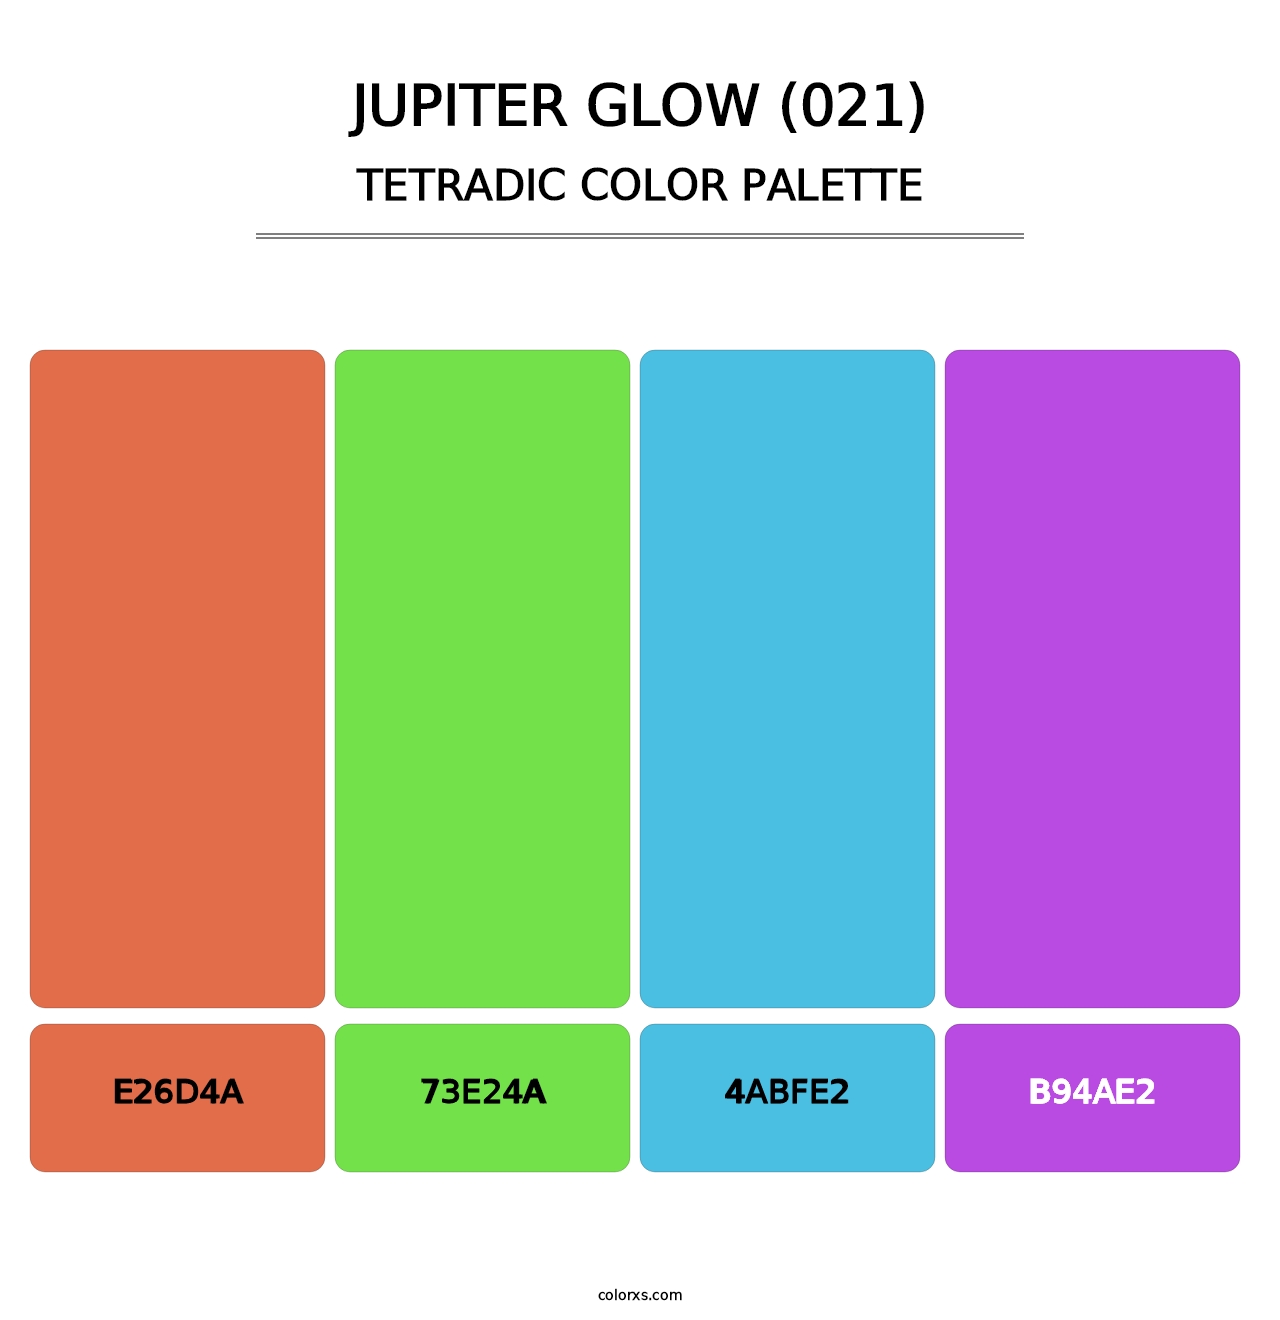 Jupiter Glow (021) - Tetradic Color Palette